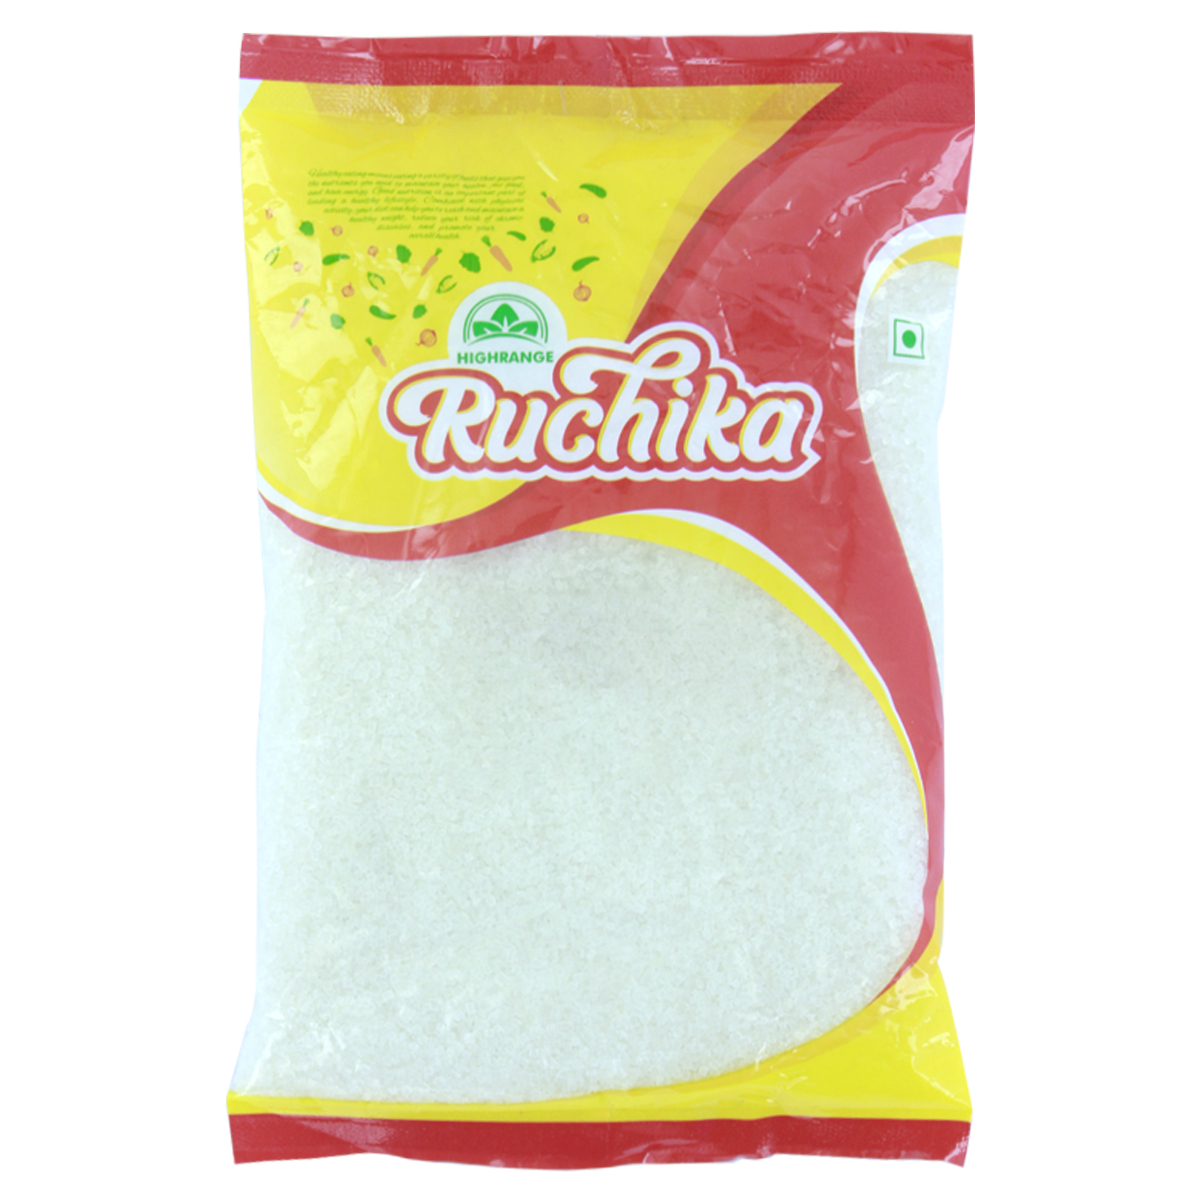 Ruchika Sugar 500g